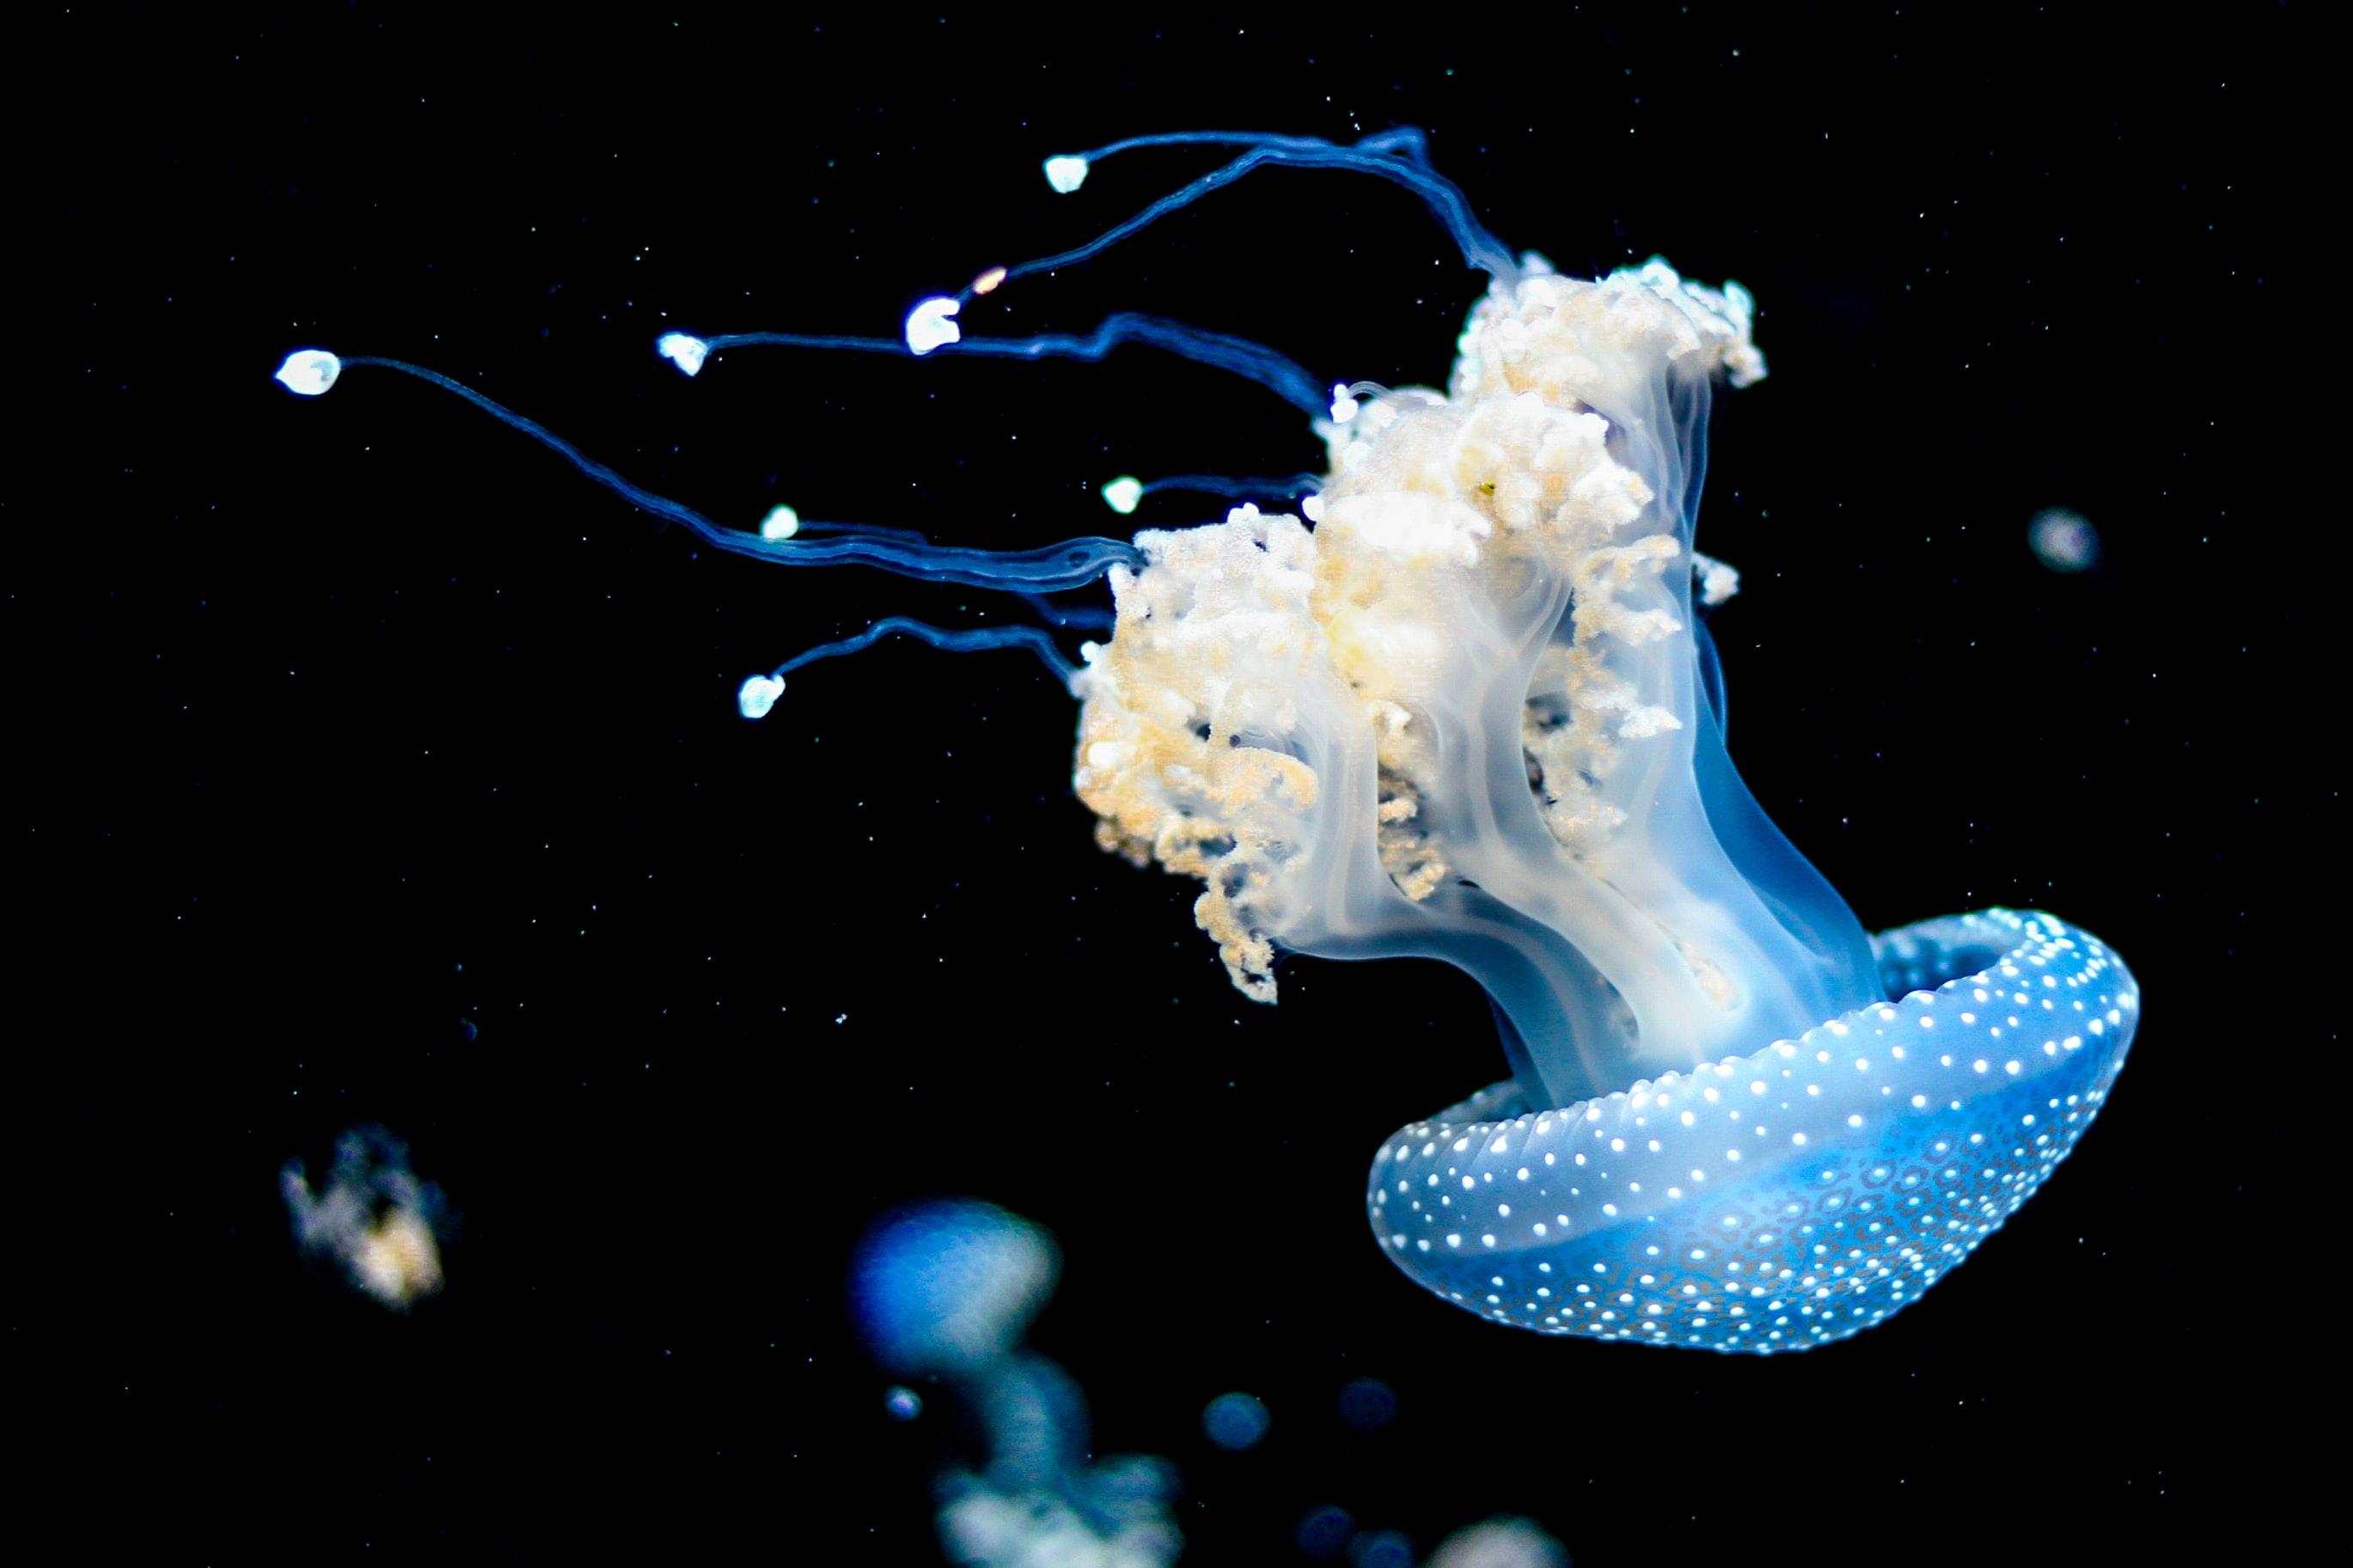  Jellyfish swimming in the ocean